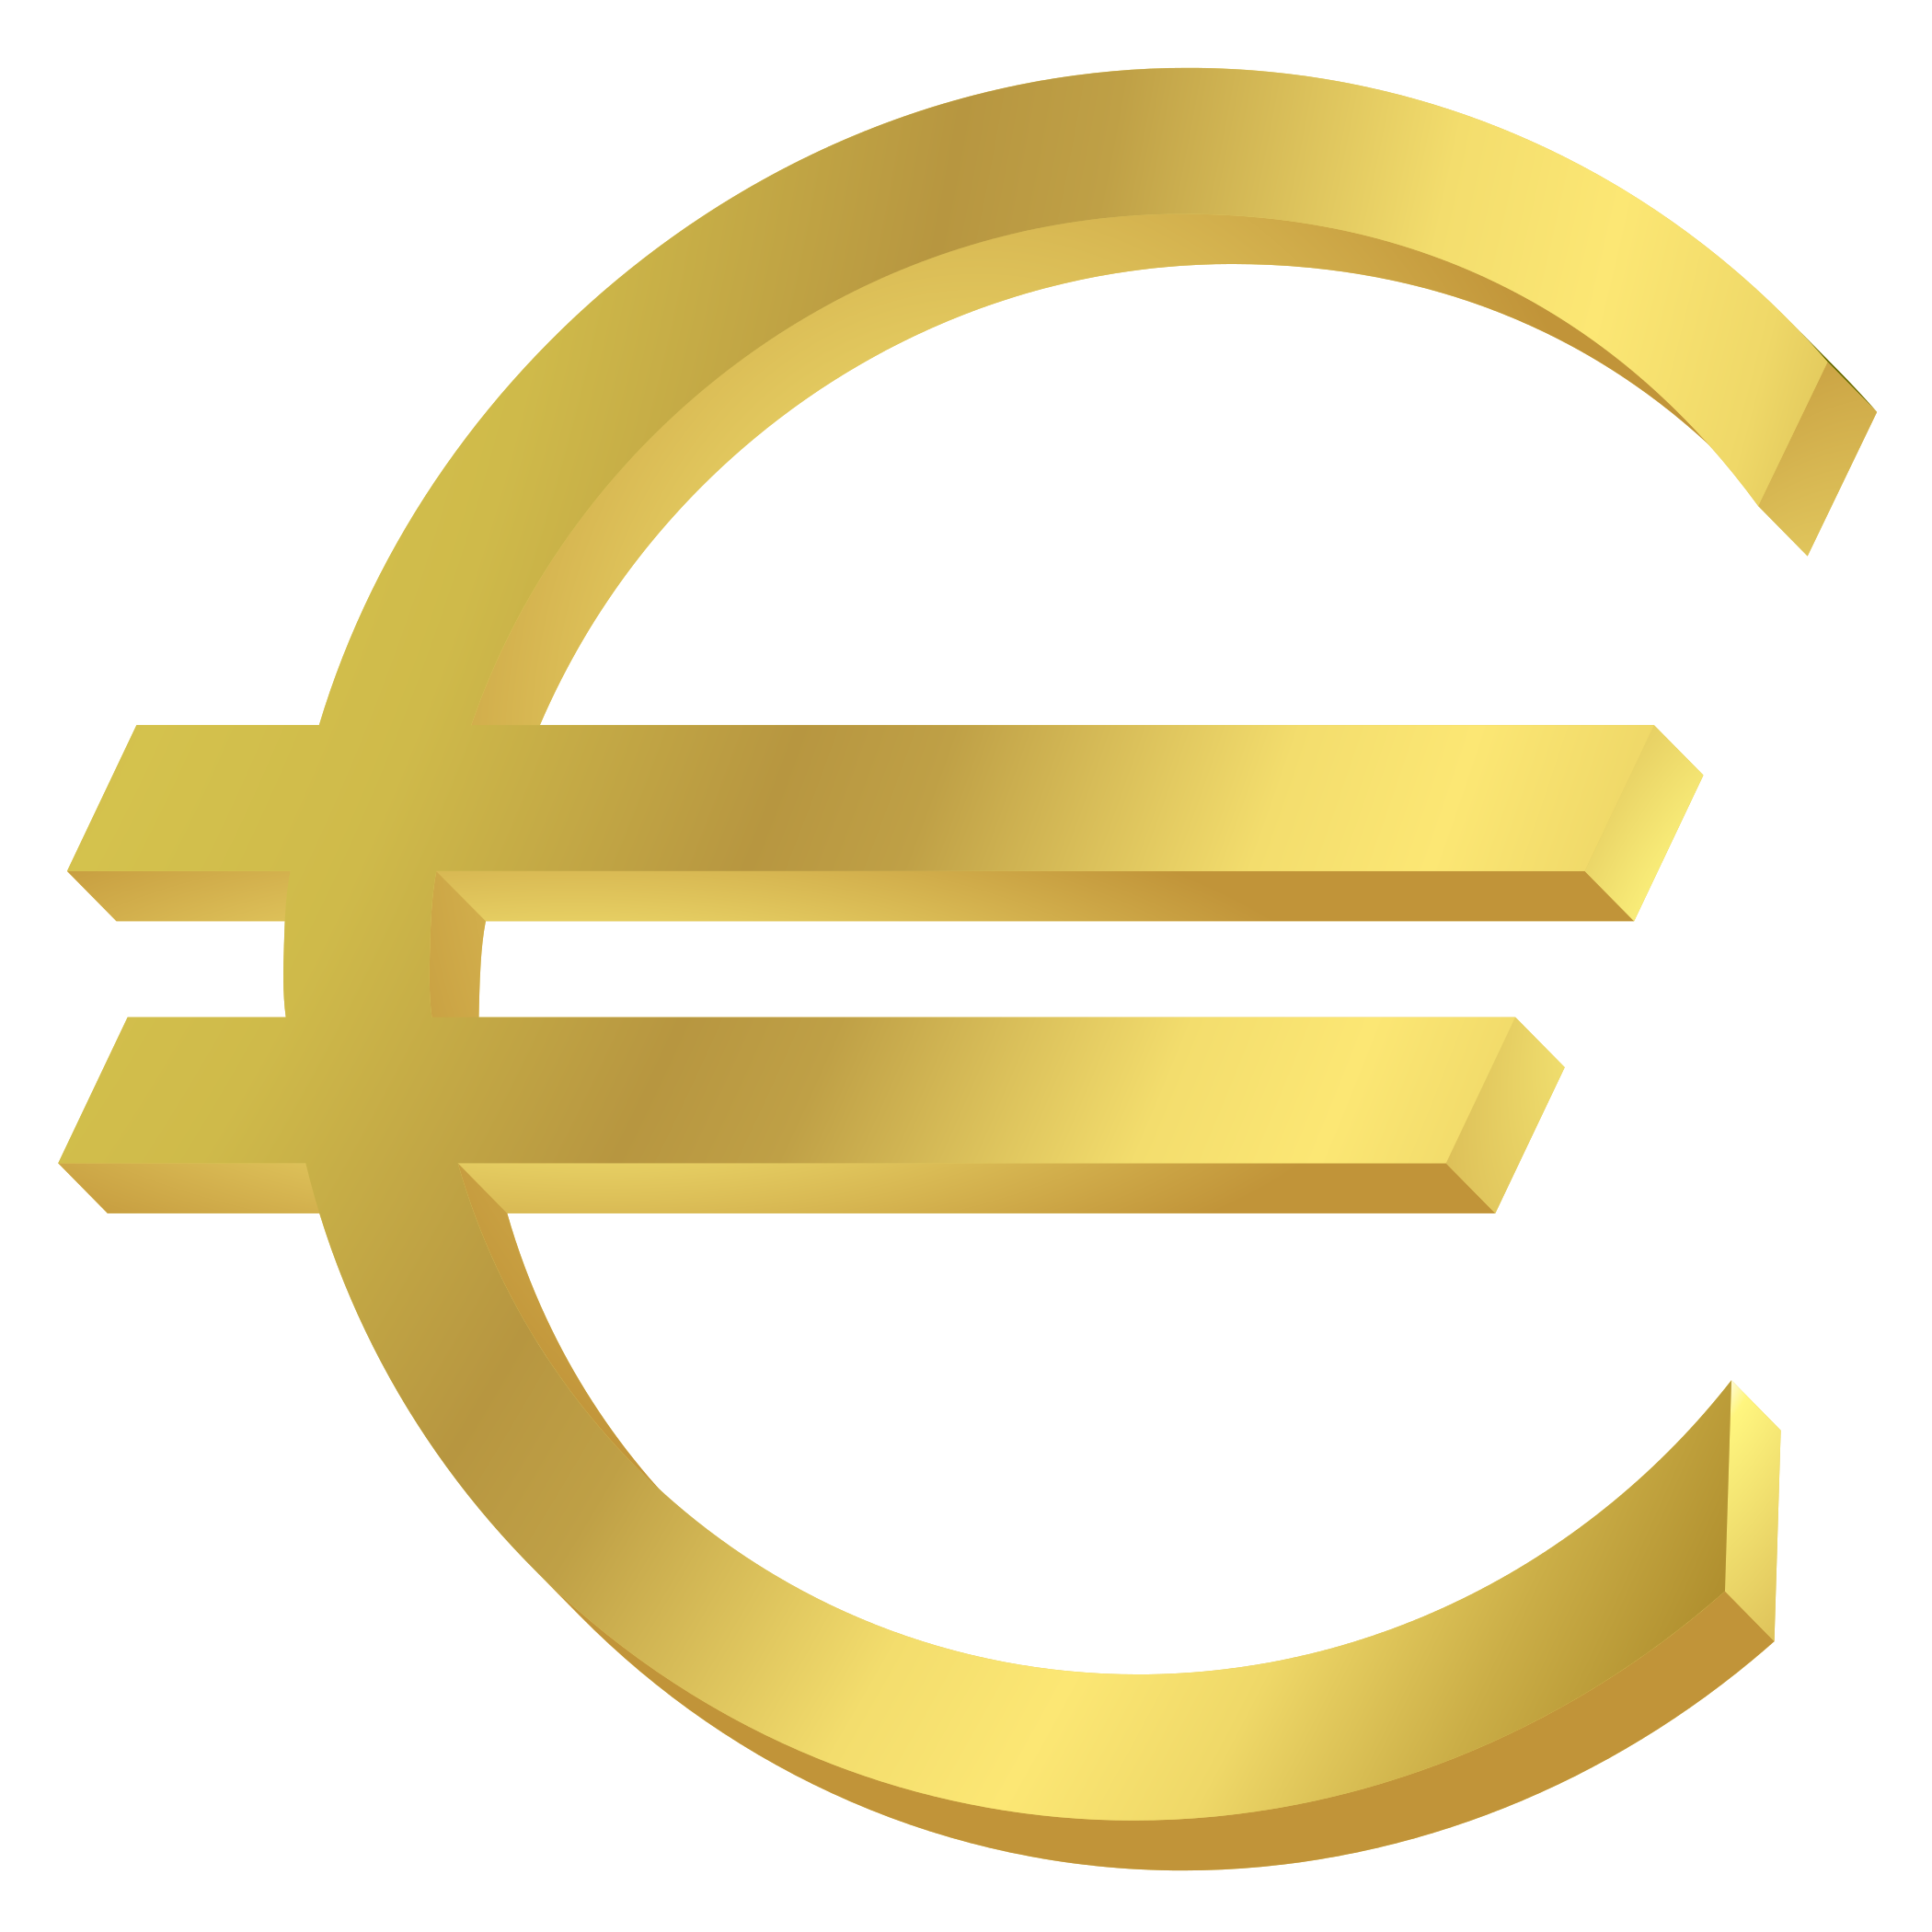 Euro Sign Transparent Picture